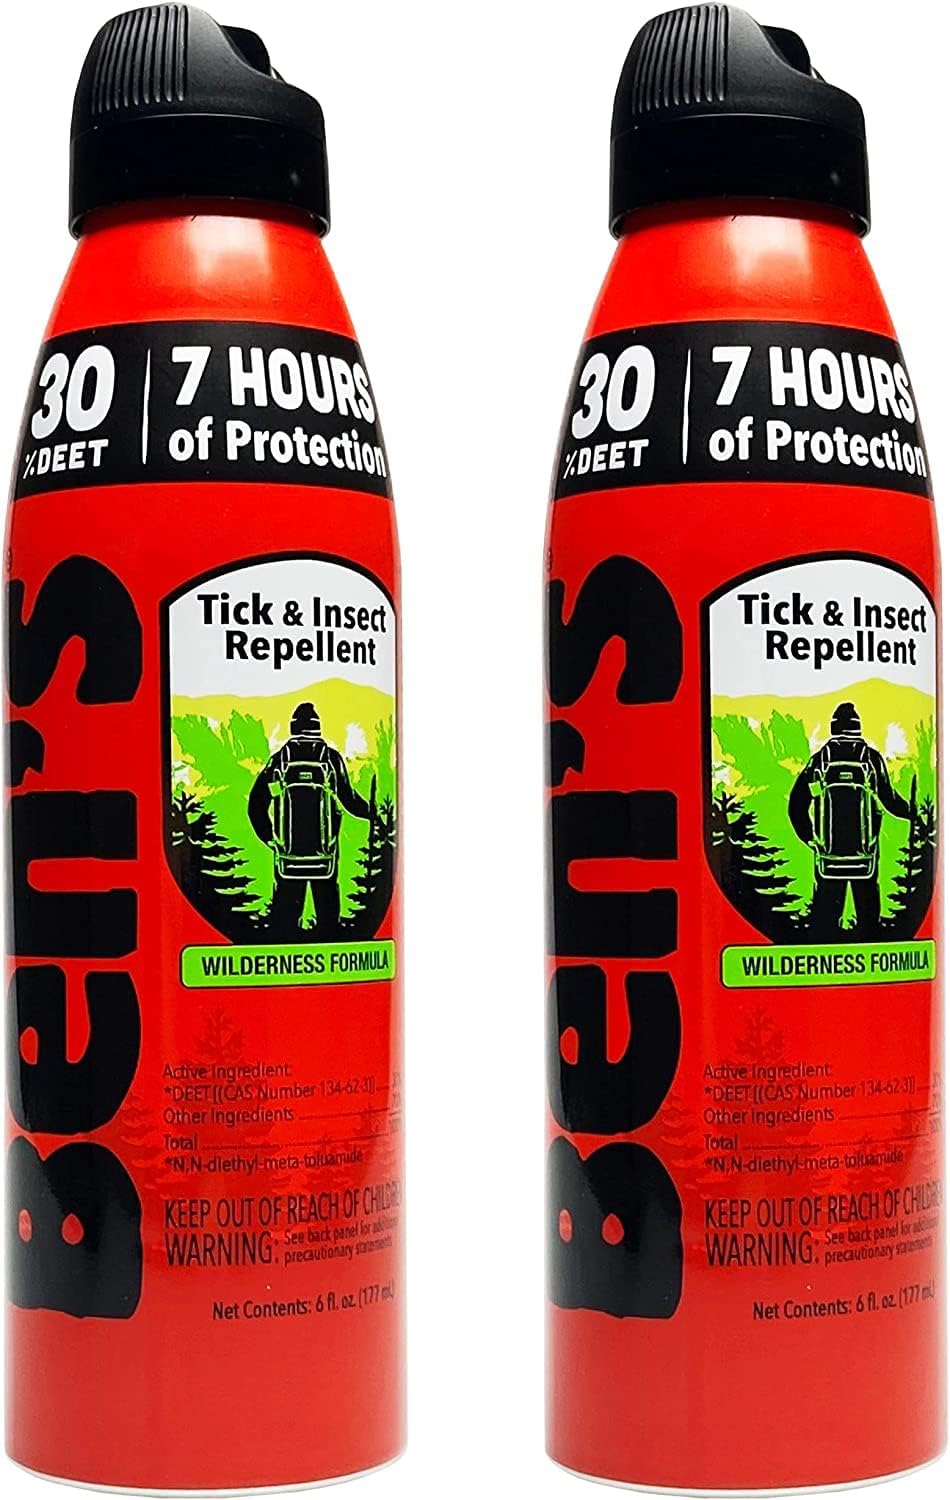 Ben's 30 Tick & Insect Repellent 6 Fl Oz. Eco-Spray - 2 Pack